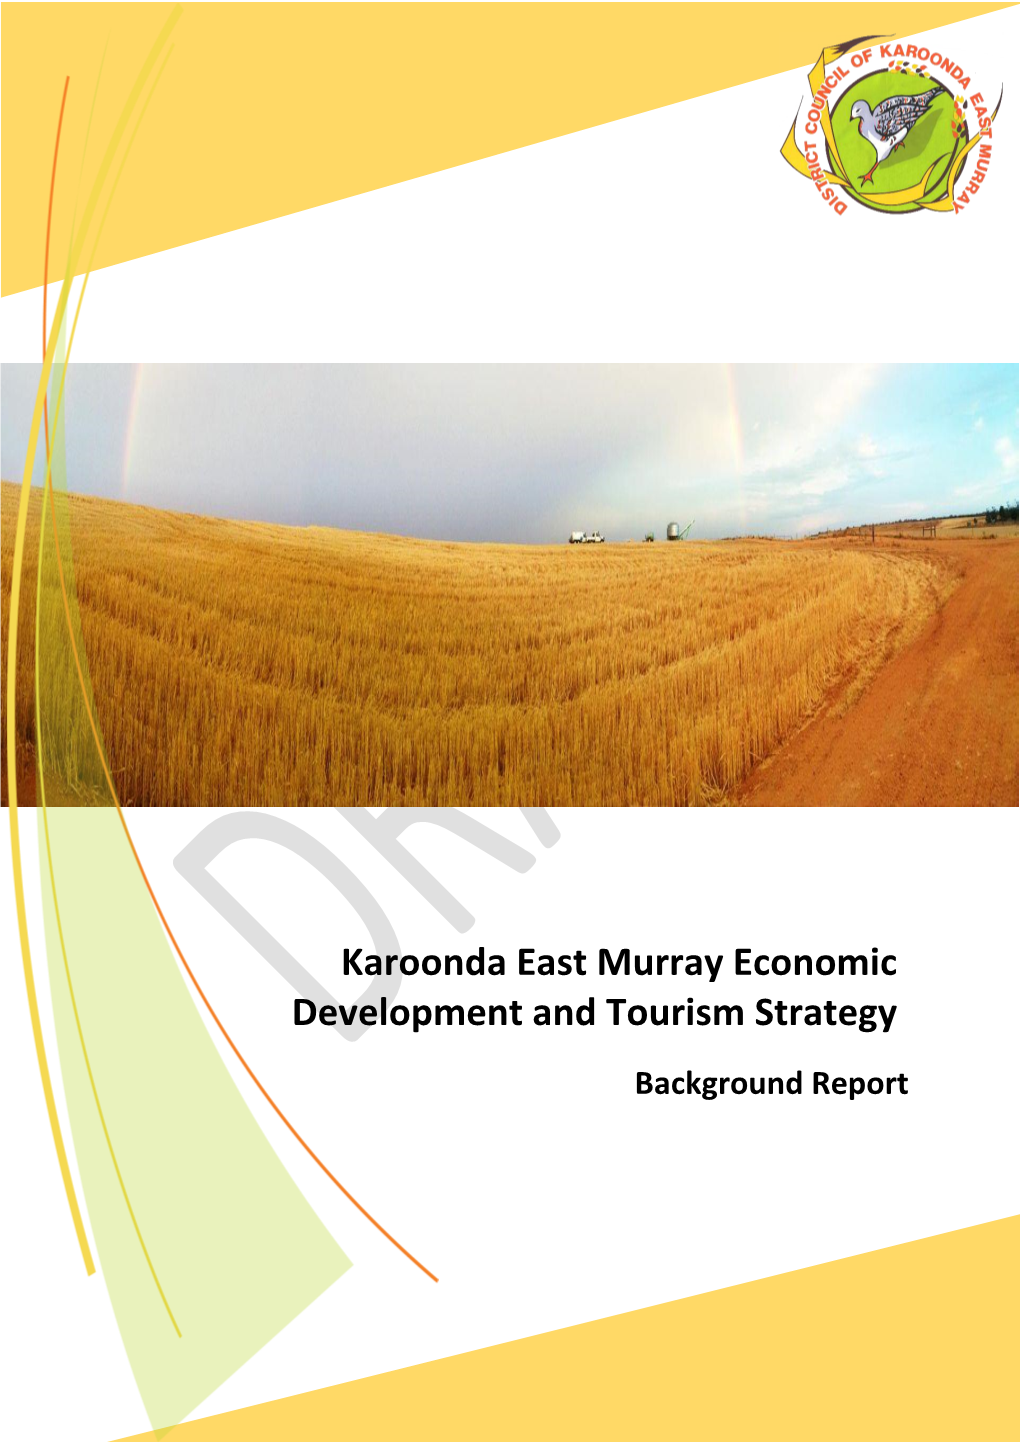 Economic Development & Tourism Background Report